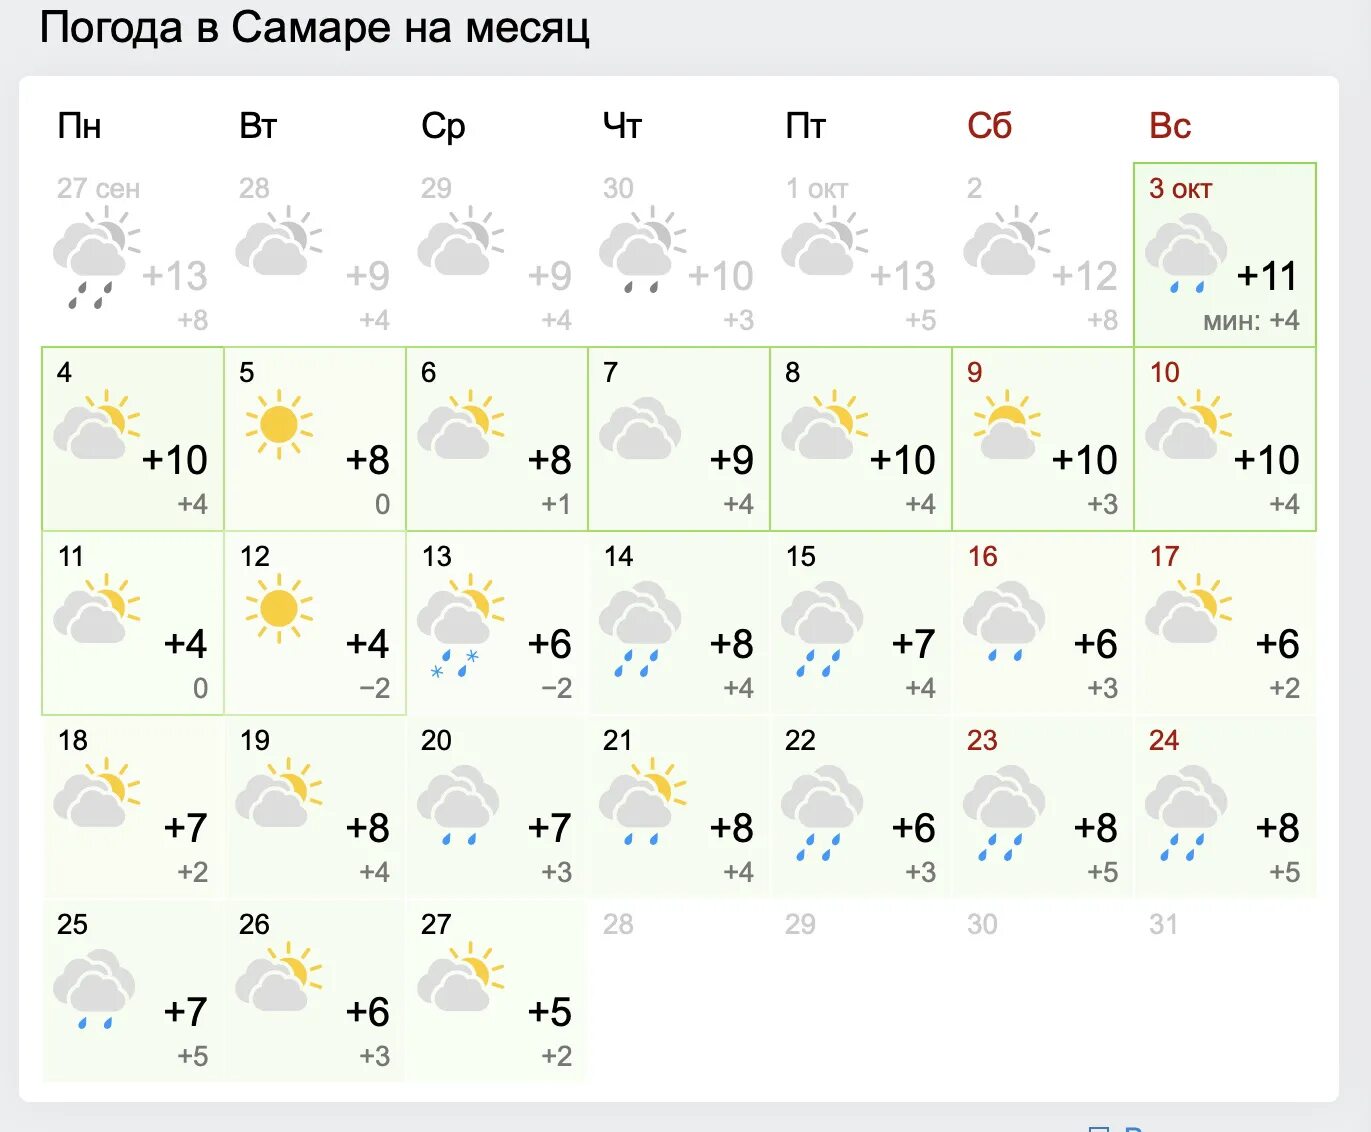 Прогноз погоды область на месяц. Погода в Самаре. Самара октябрь 2021. Климат Самары 2021 год. Погода в Самаре на месяц.